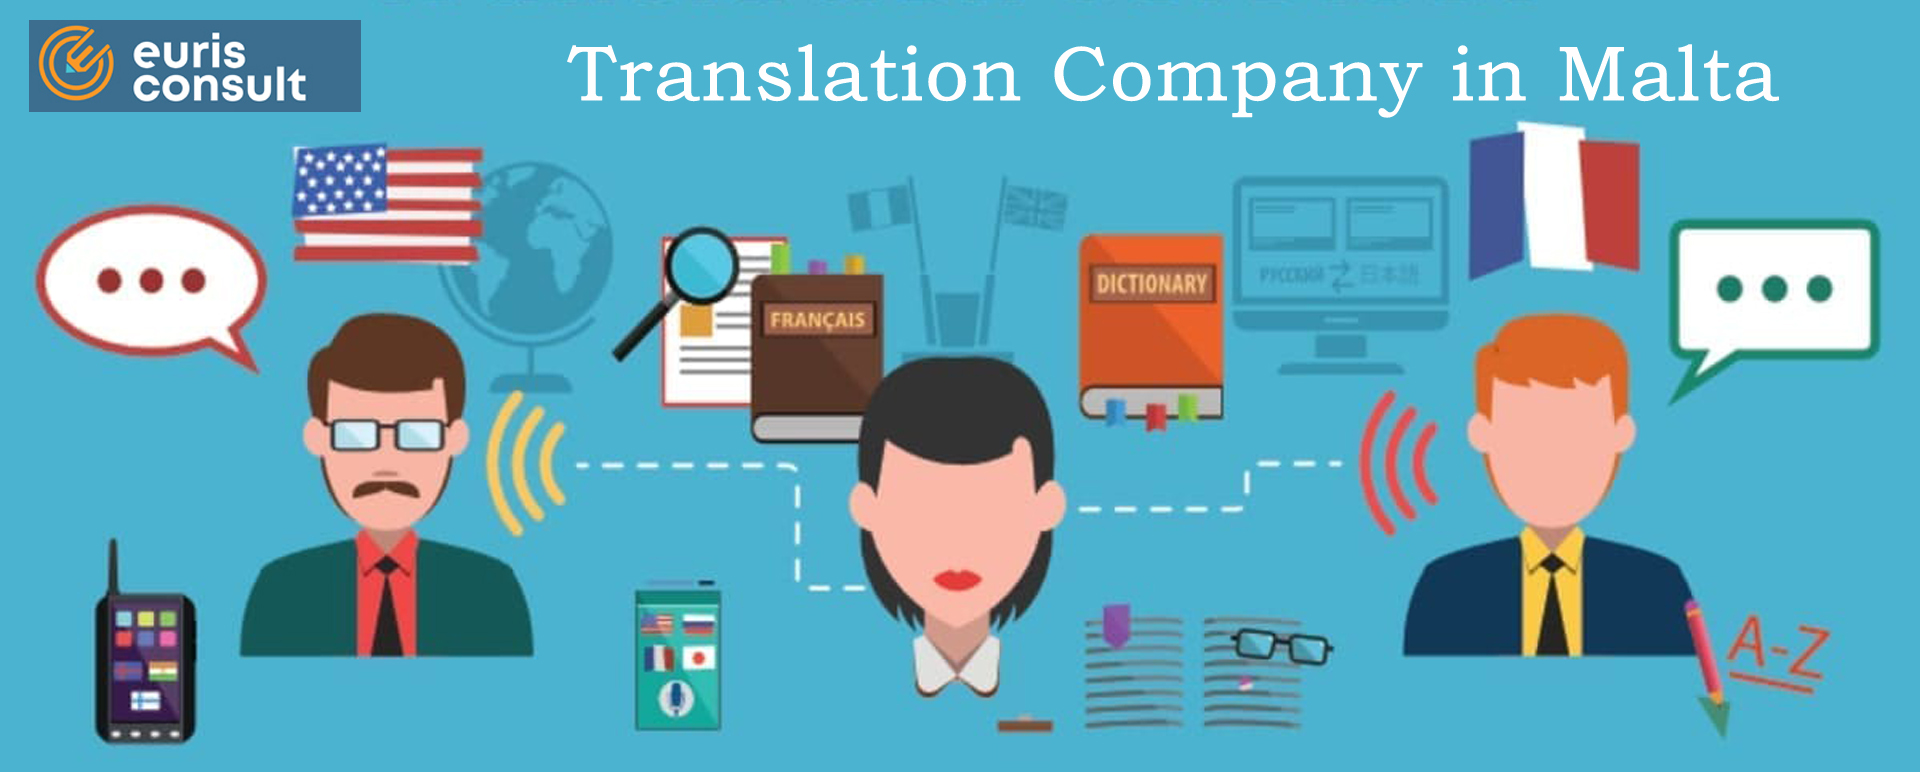 Translation Company in Malta